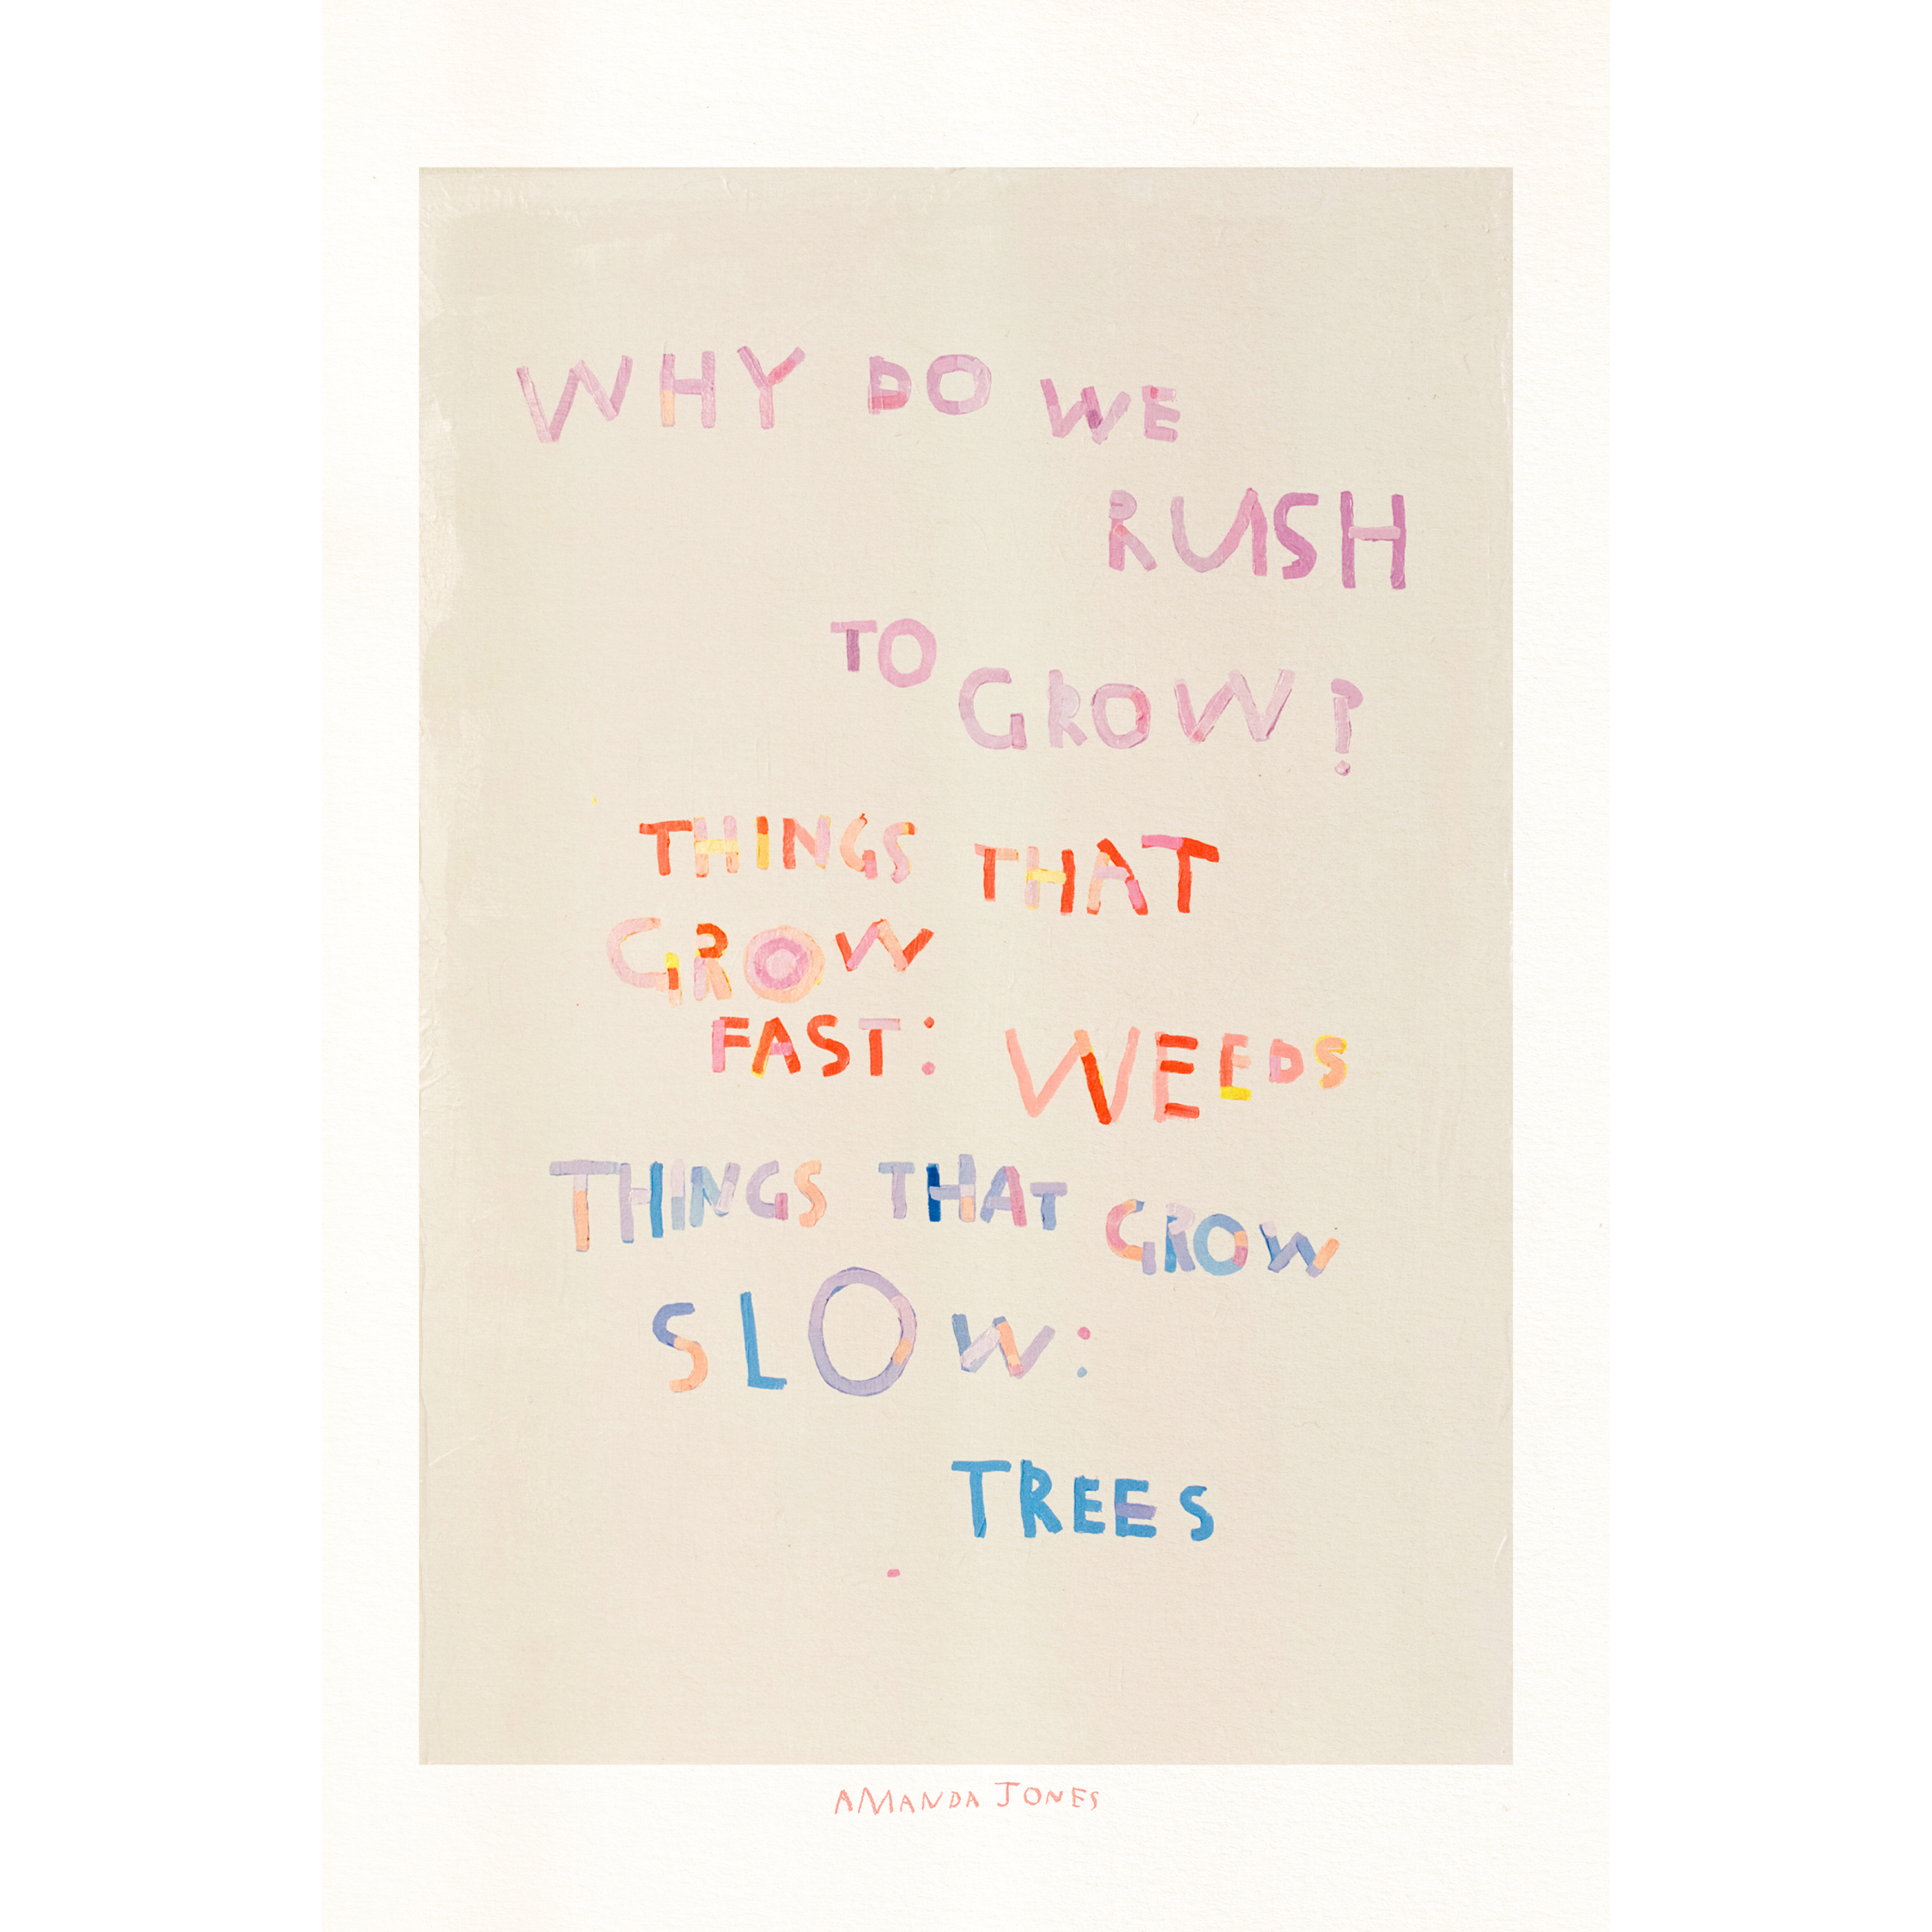 'Why do we rush to grow?'